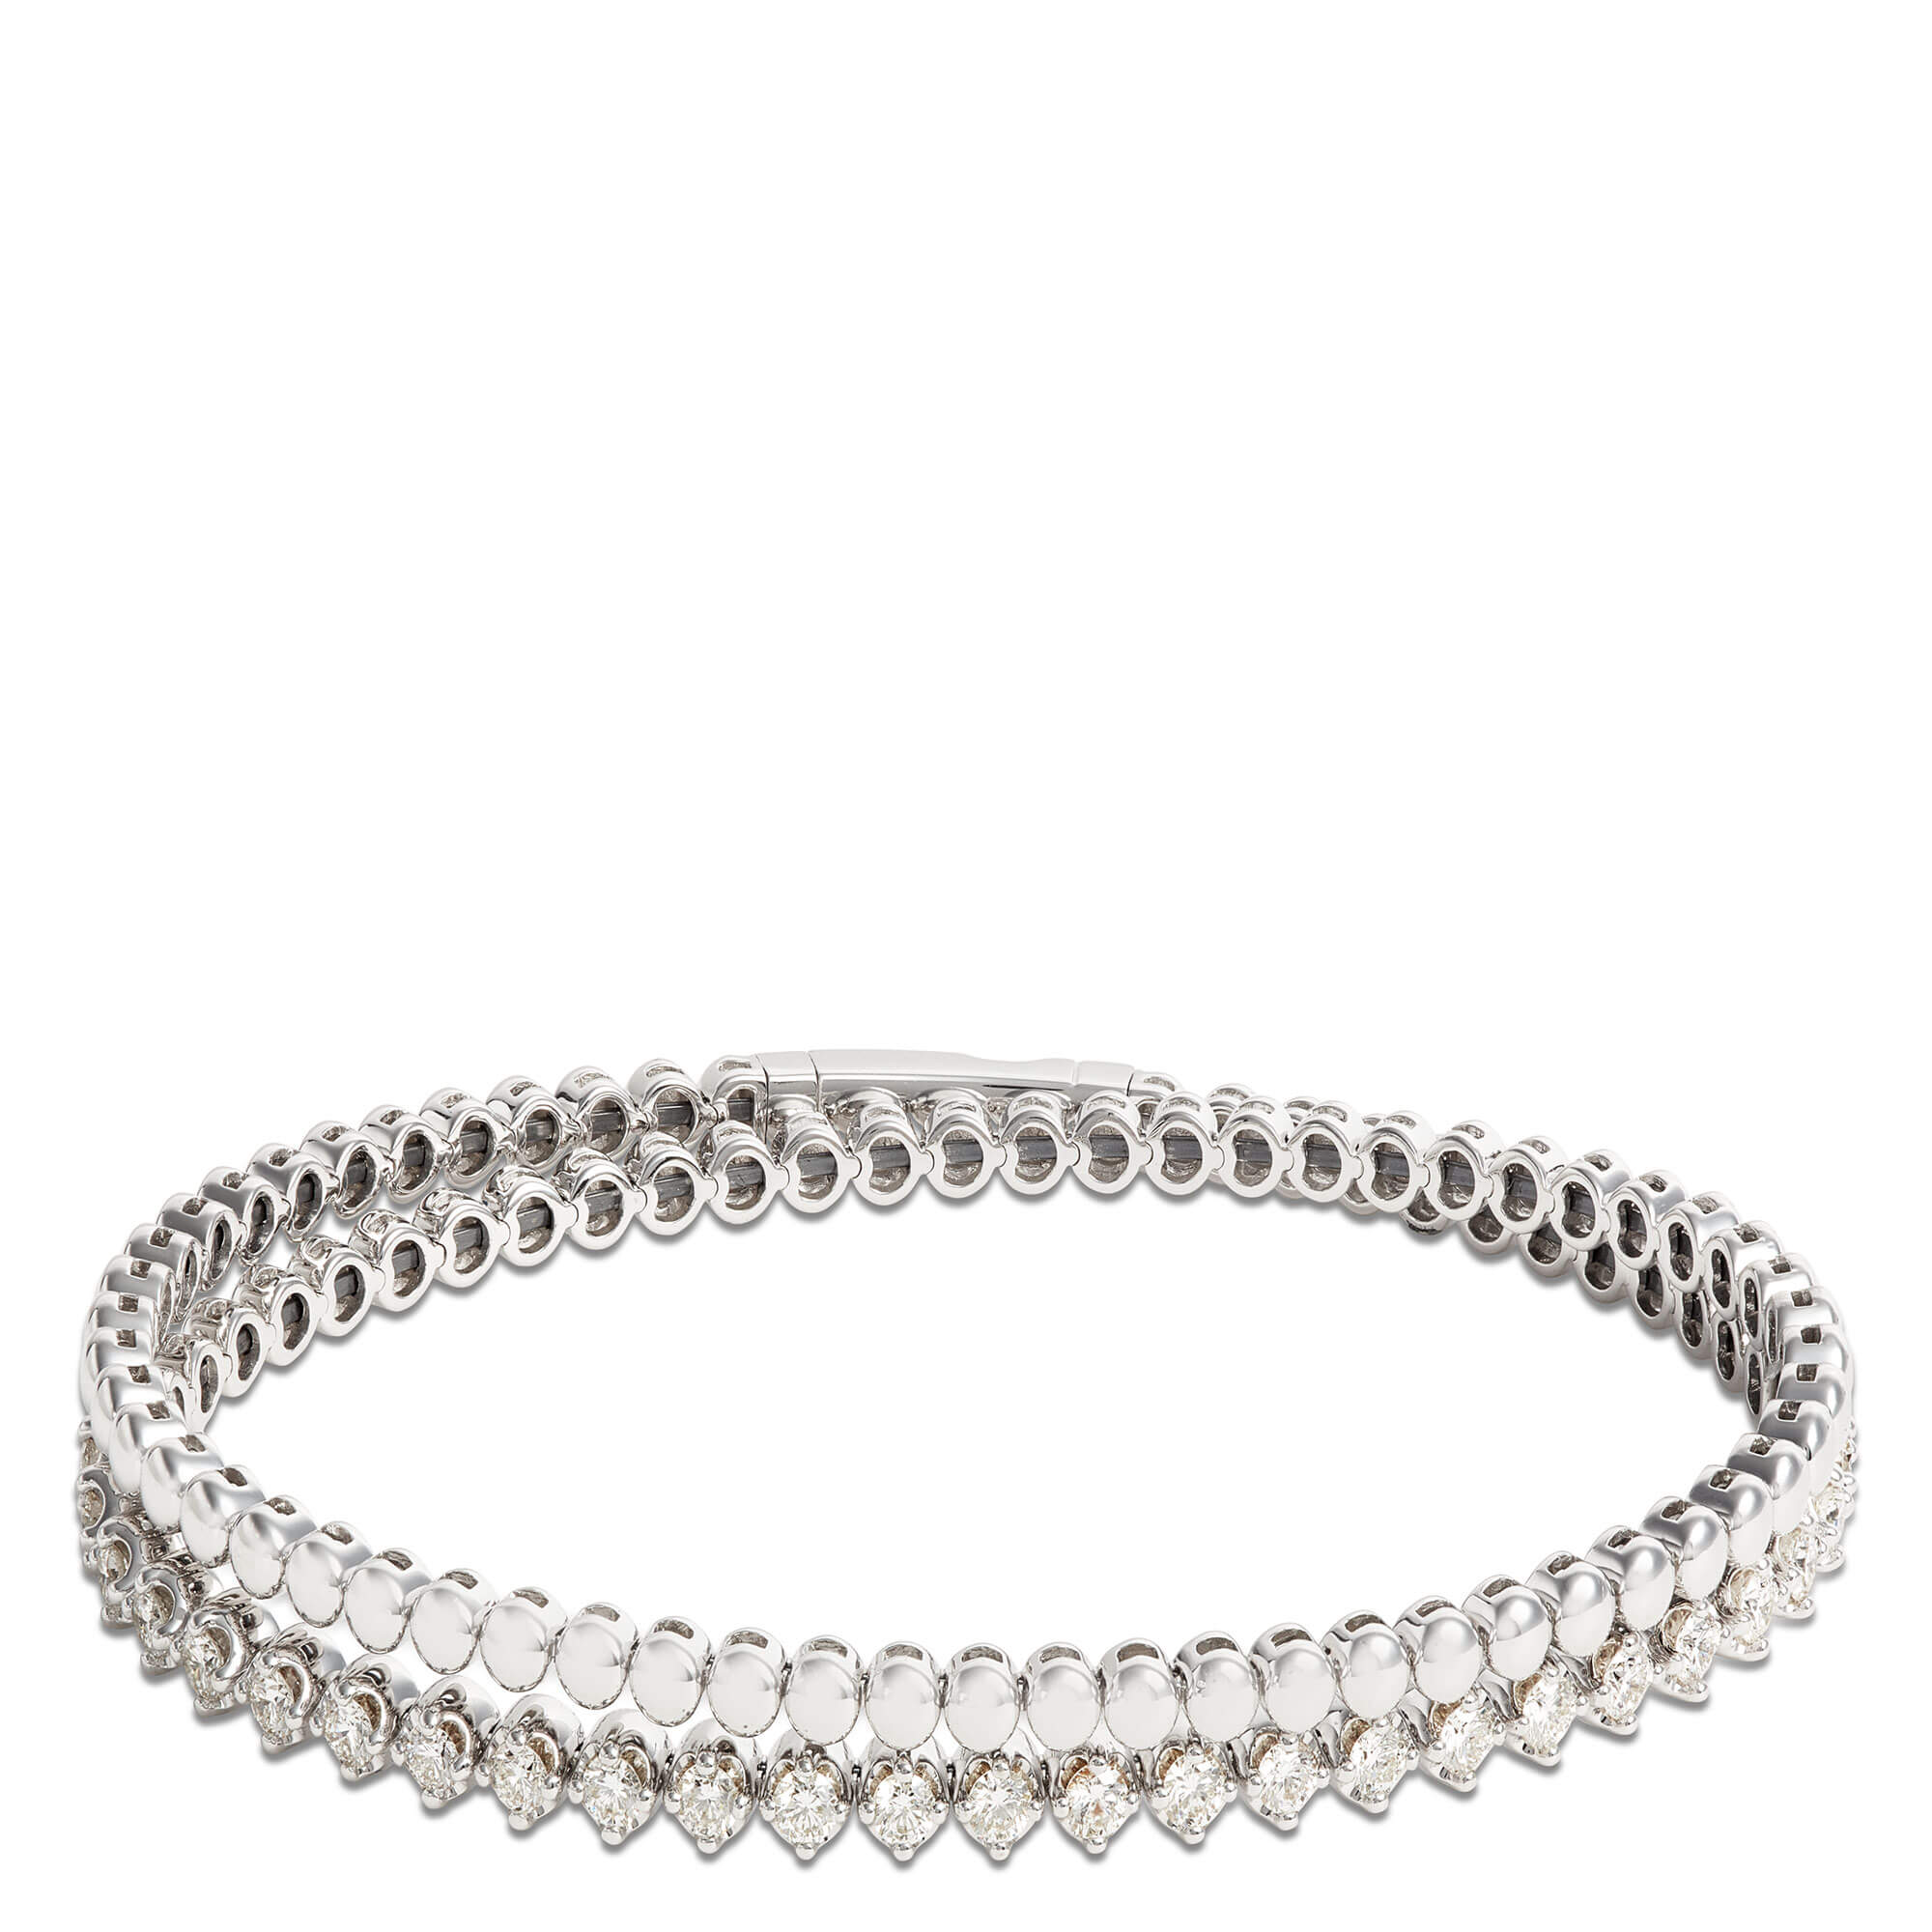 Ben Bridge Jewelers Women's Rose & White Gold Diamond Bangle Bracelet